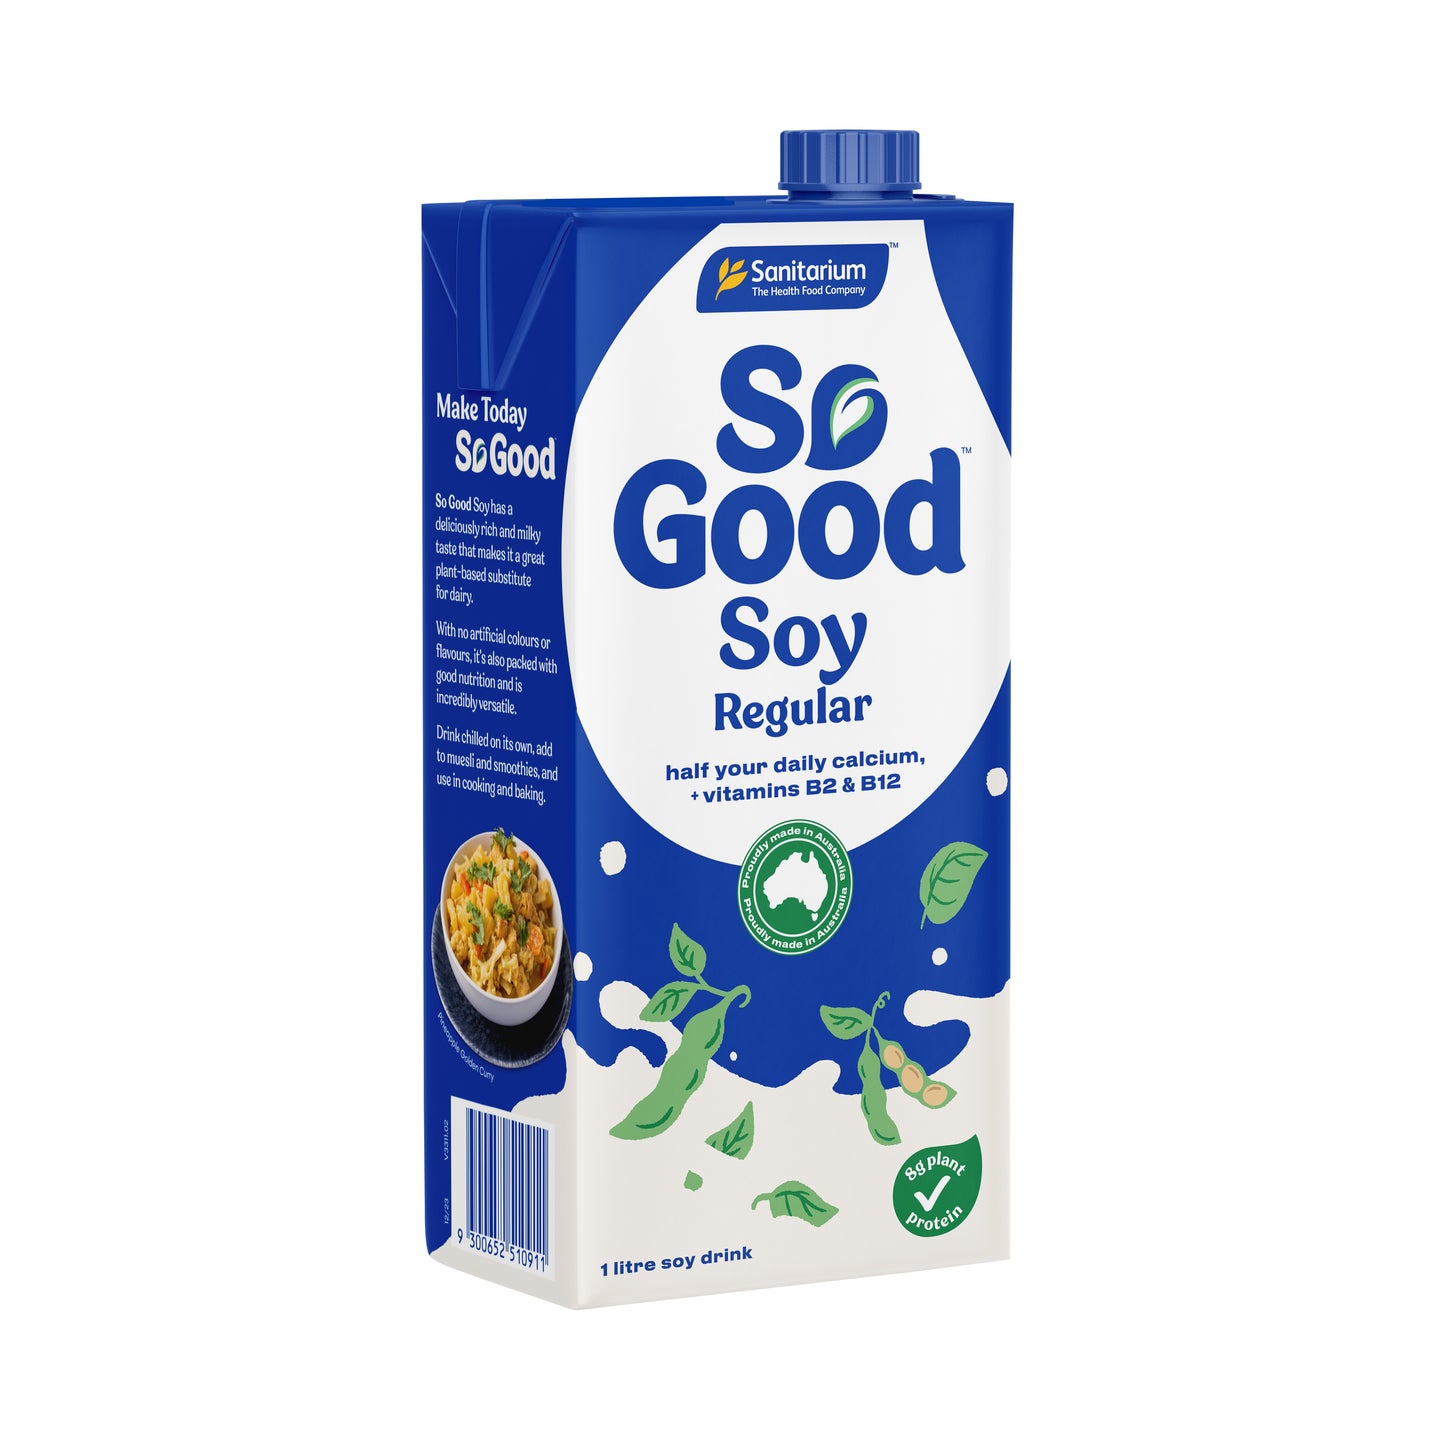 (Buy 6) Sanitarium So Good Soymilk Regular 1 Liter